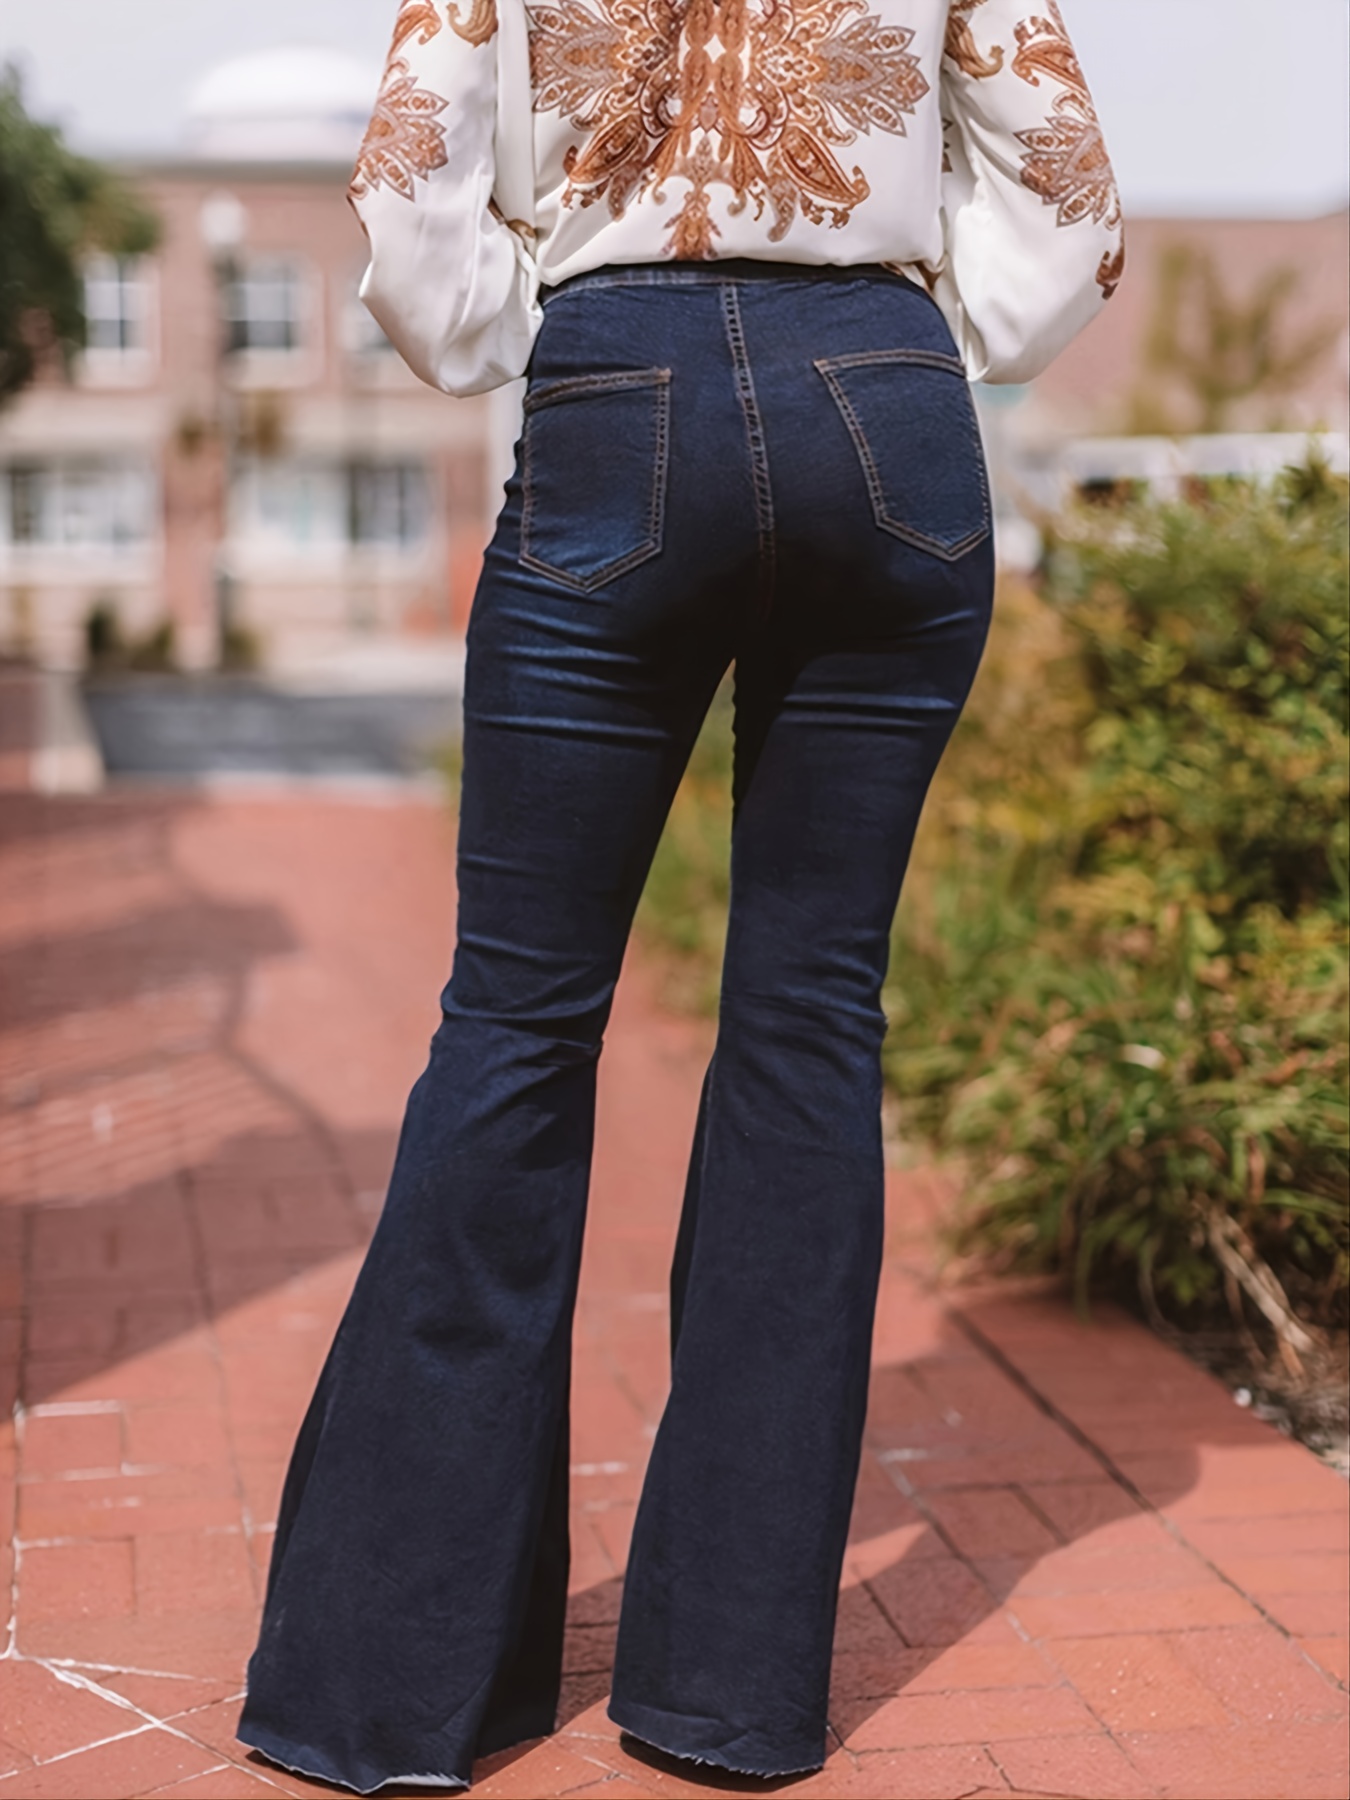 High Waisted Bell Bottom Jeans for Women Black Flare Jeans Retro